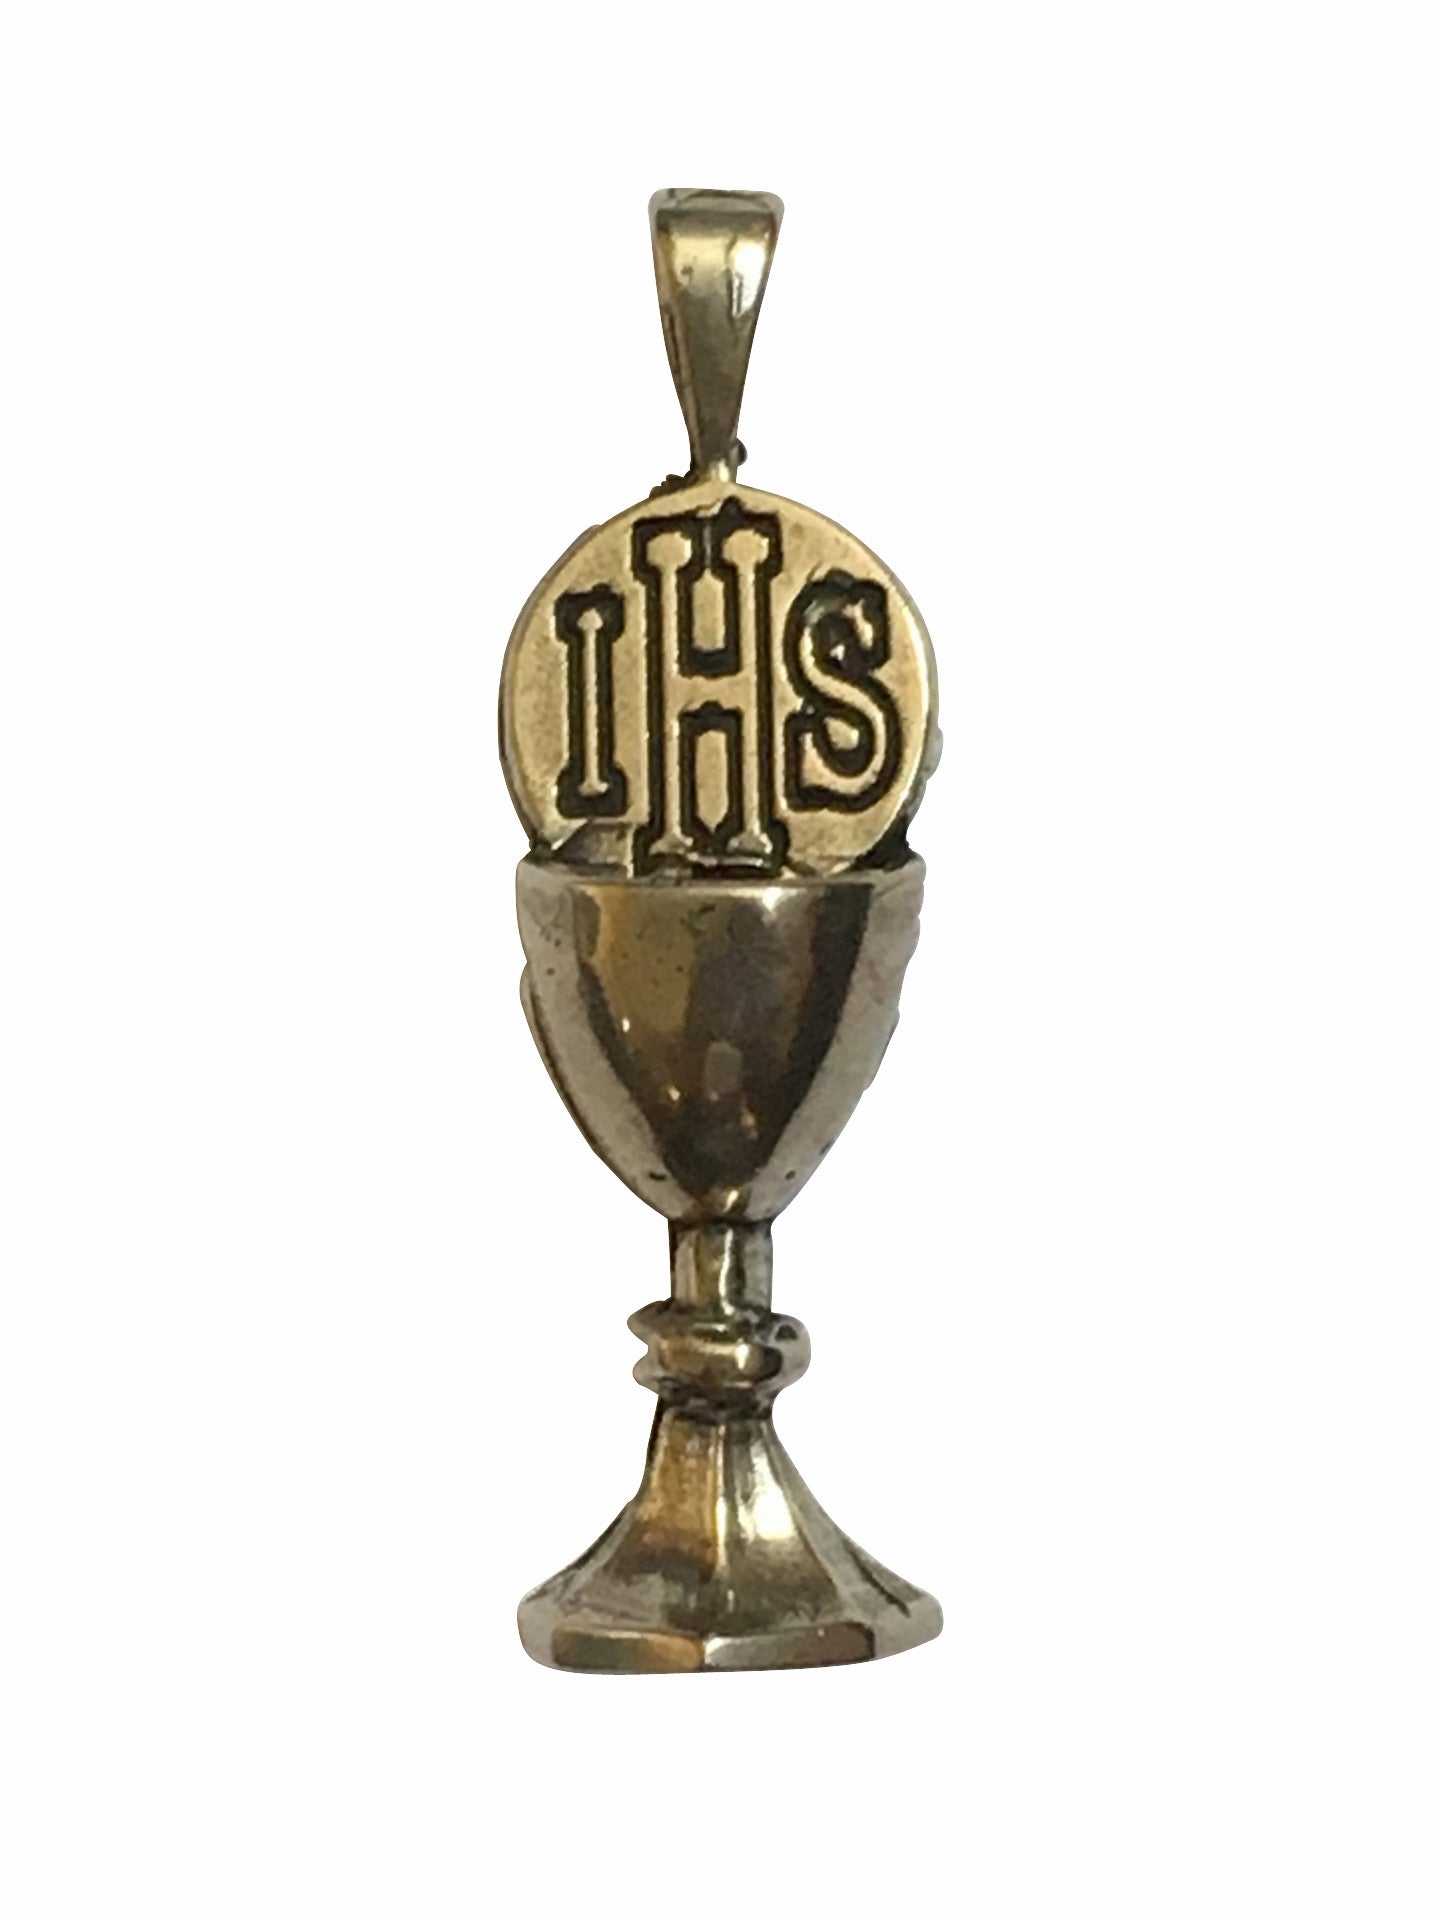 The Eucharistic Chalice Pendant